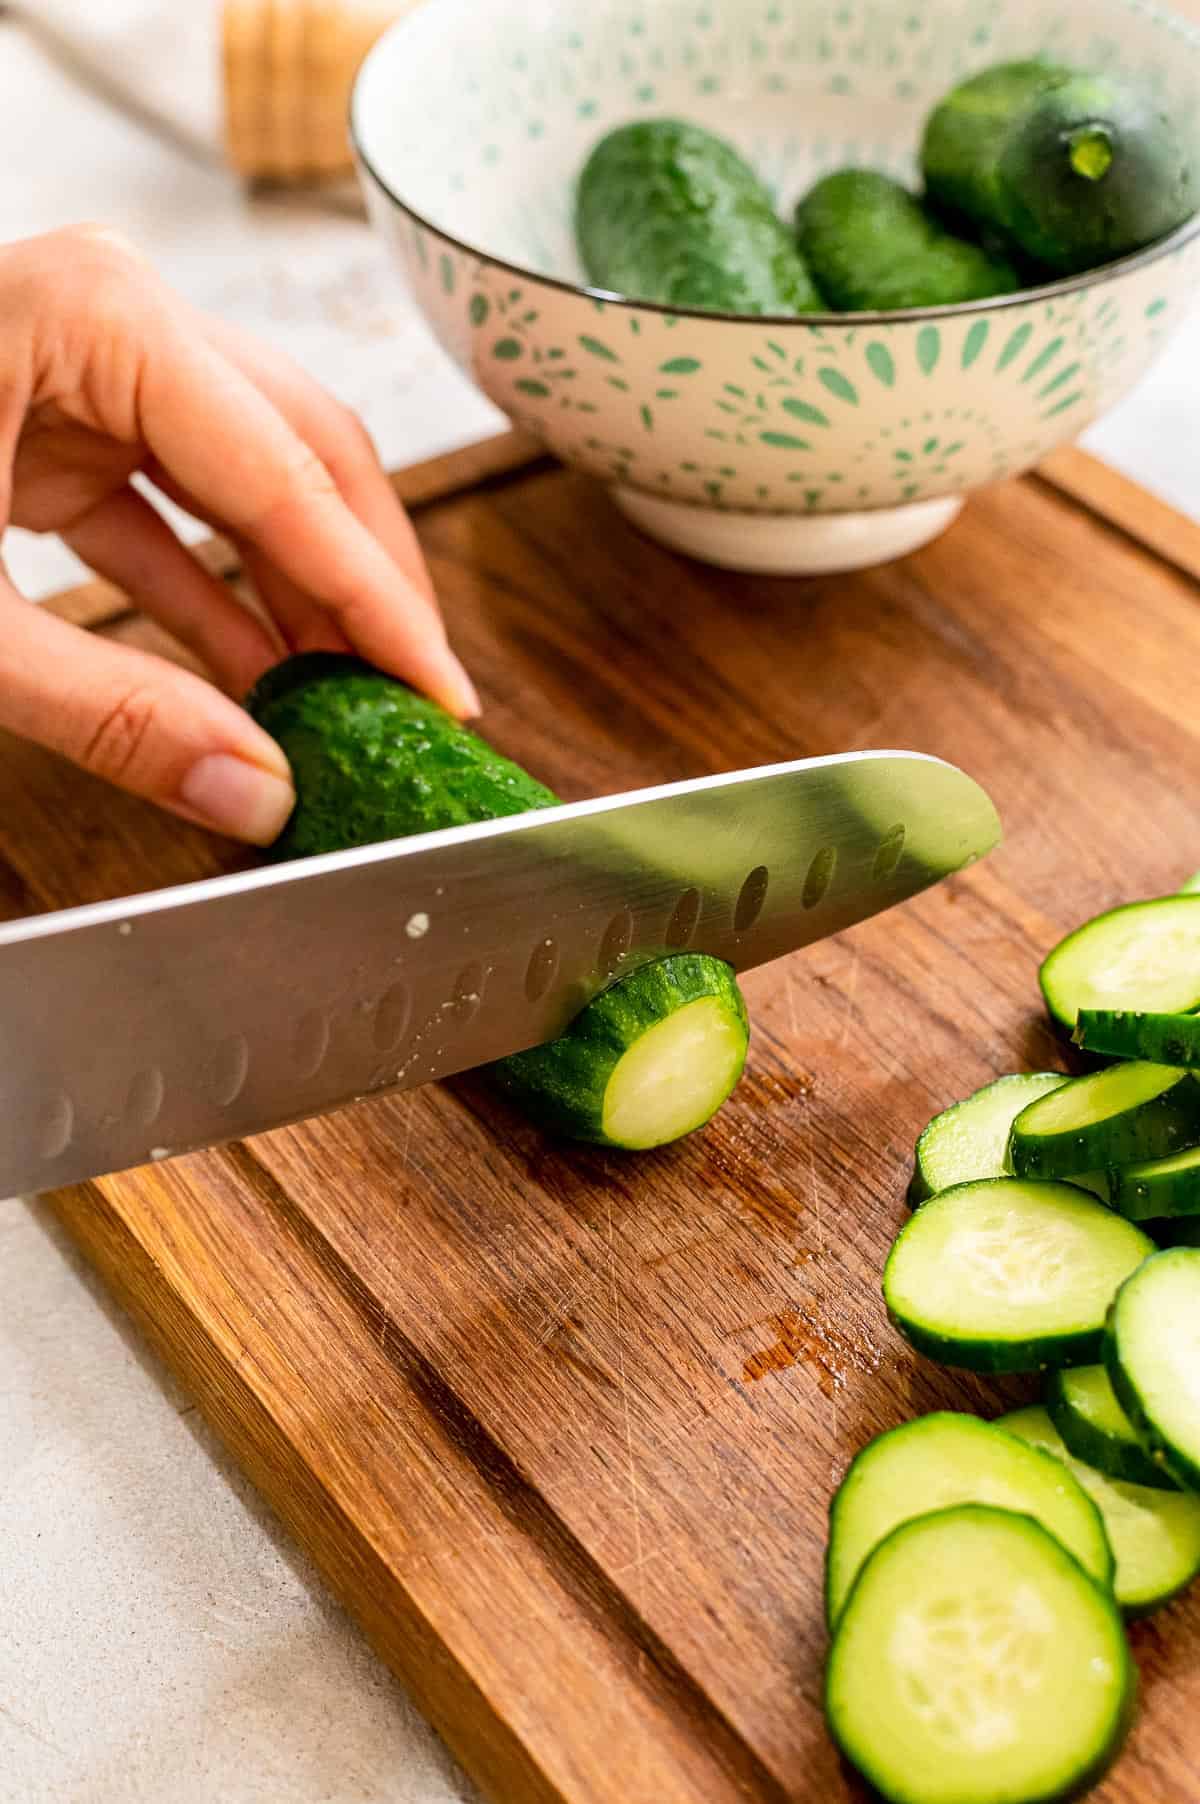 Chef knife slicing cucumbers